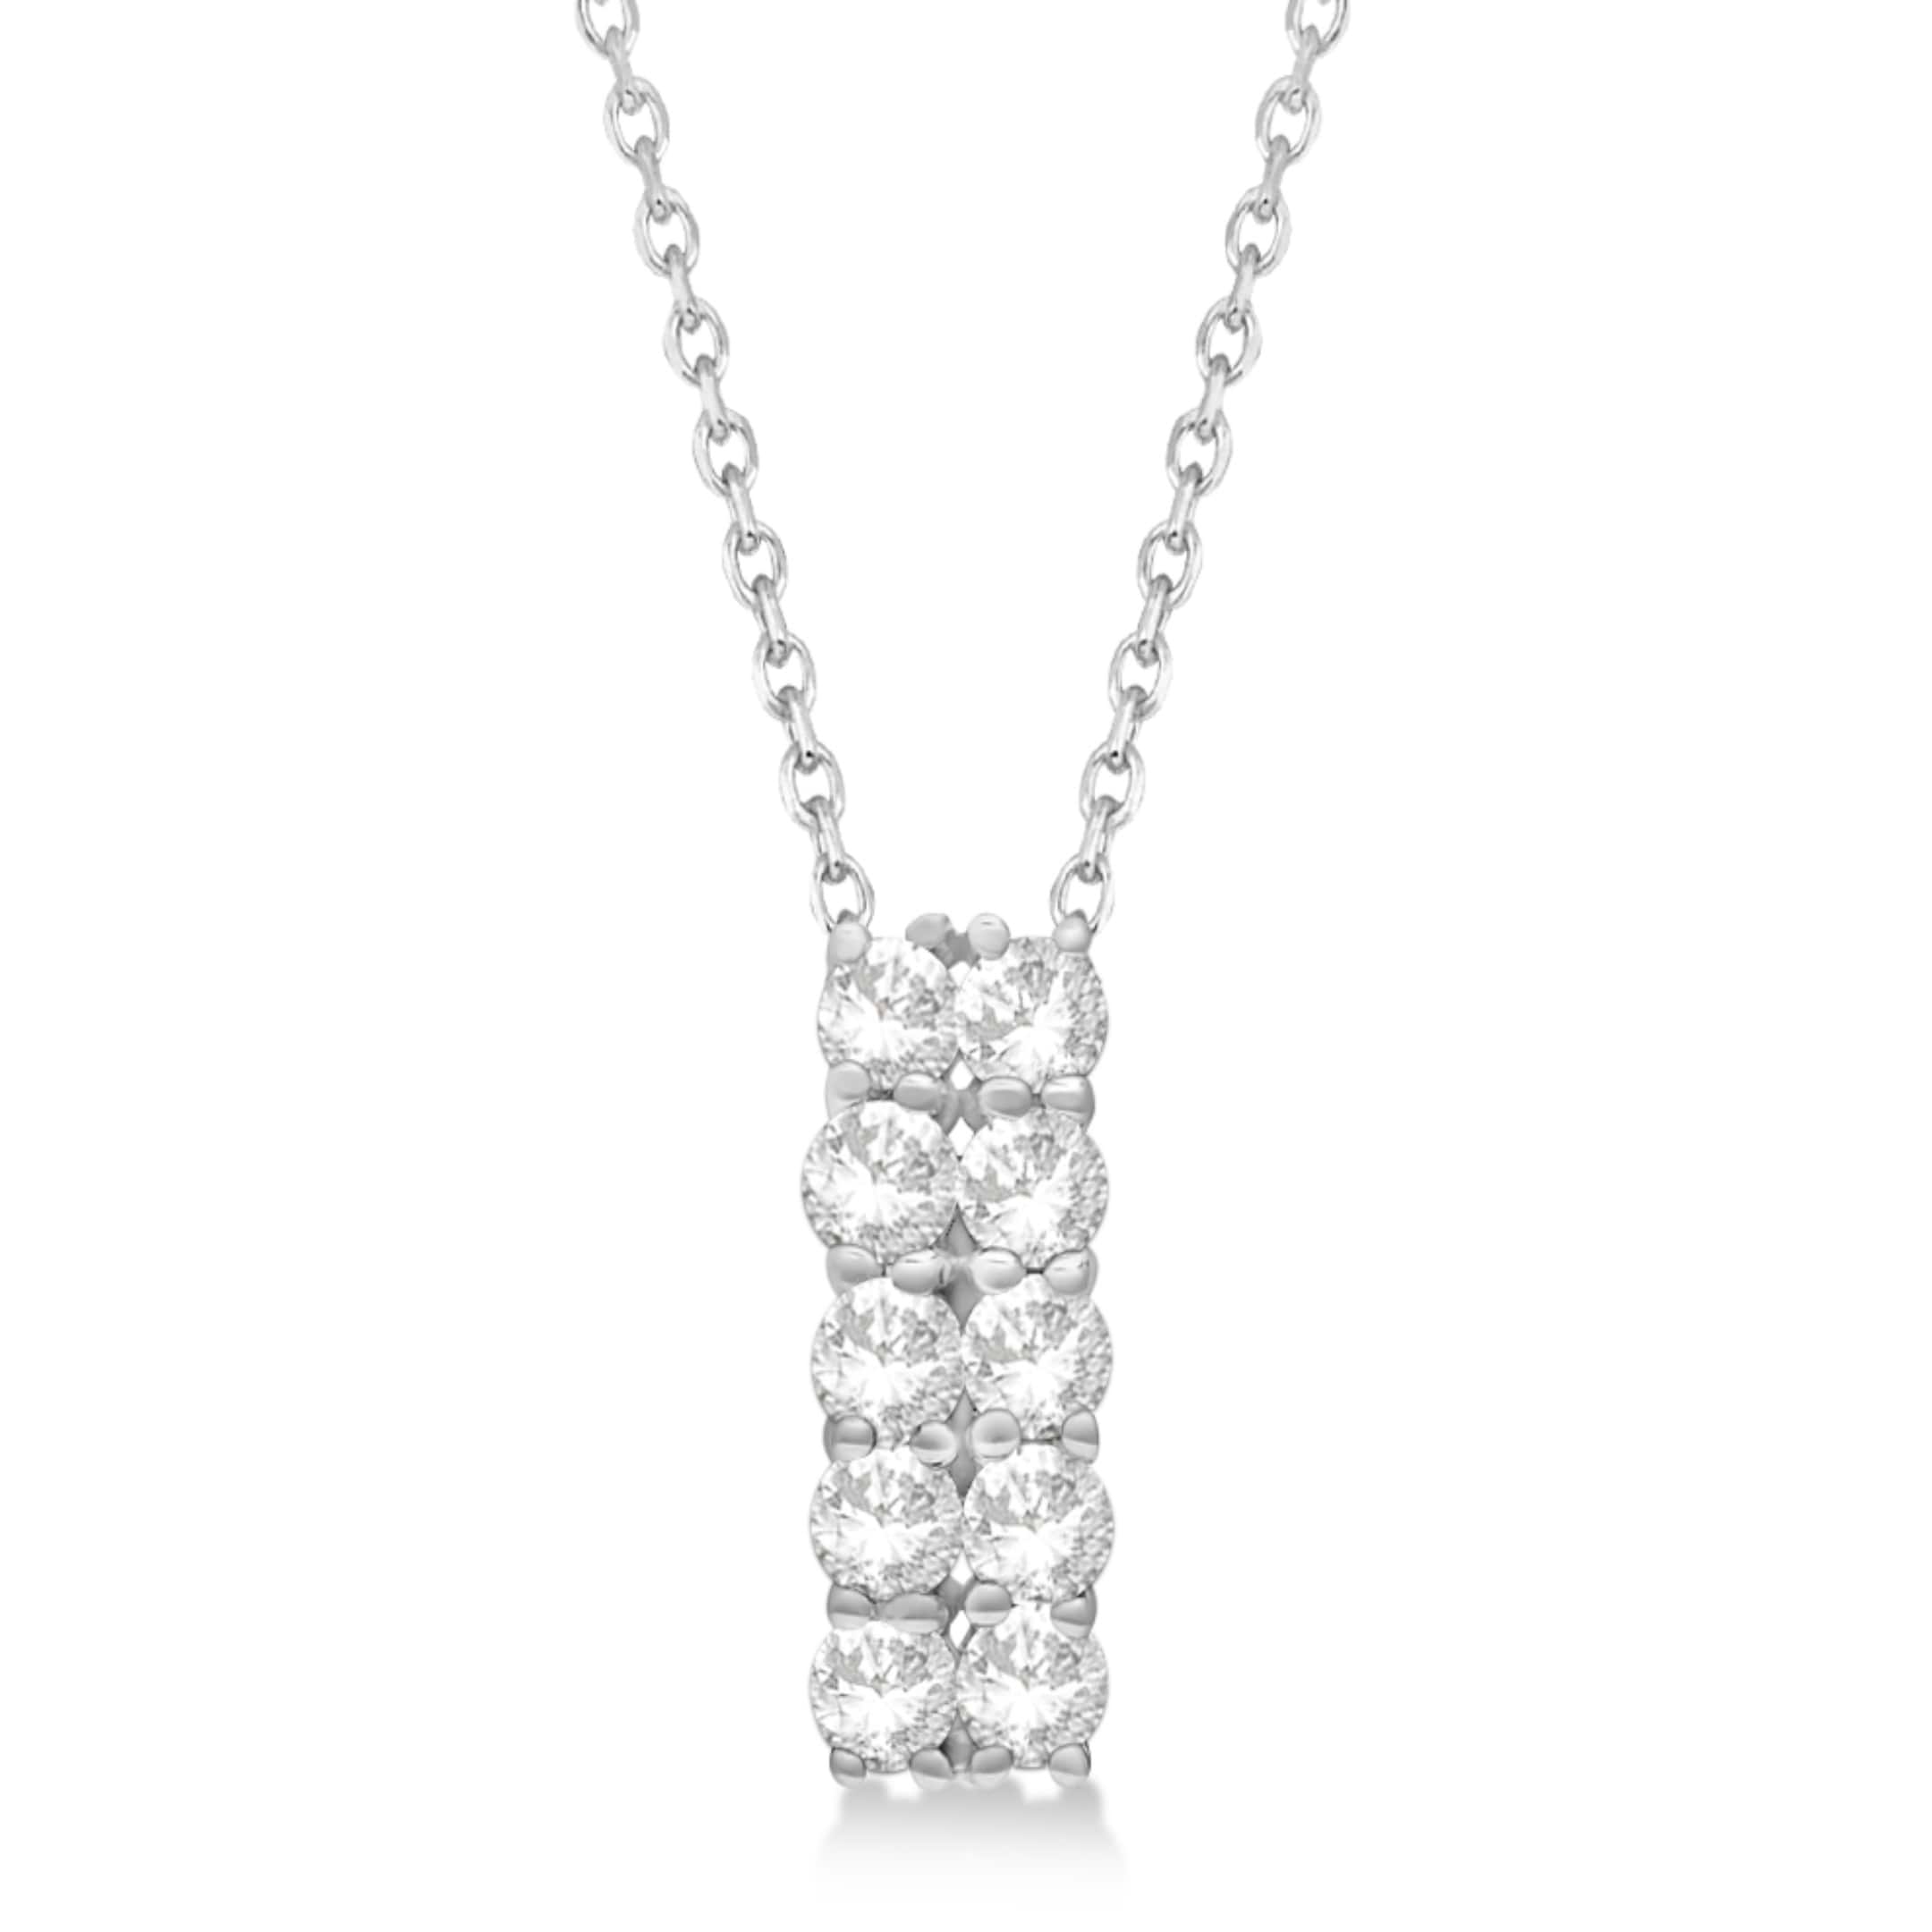 Double Row Diamond Drop Necklace 14k White Gold (1.01ct)